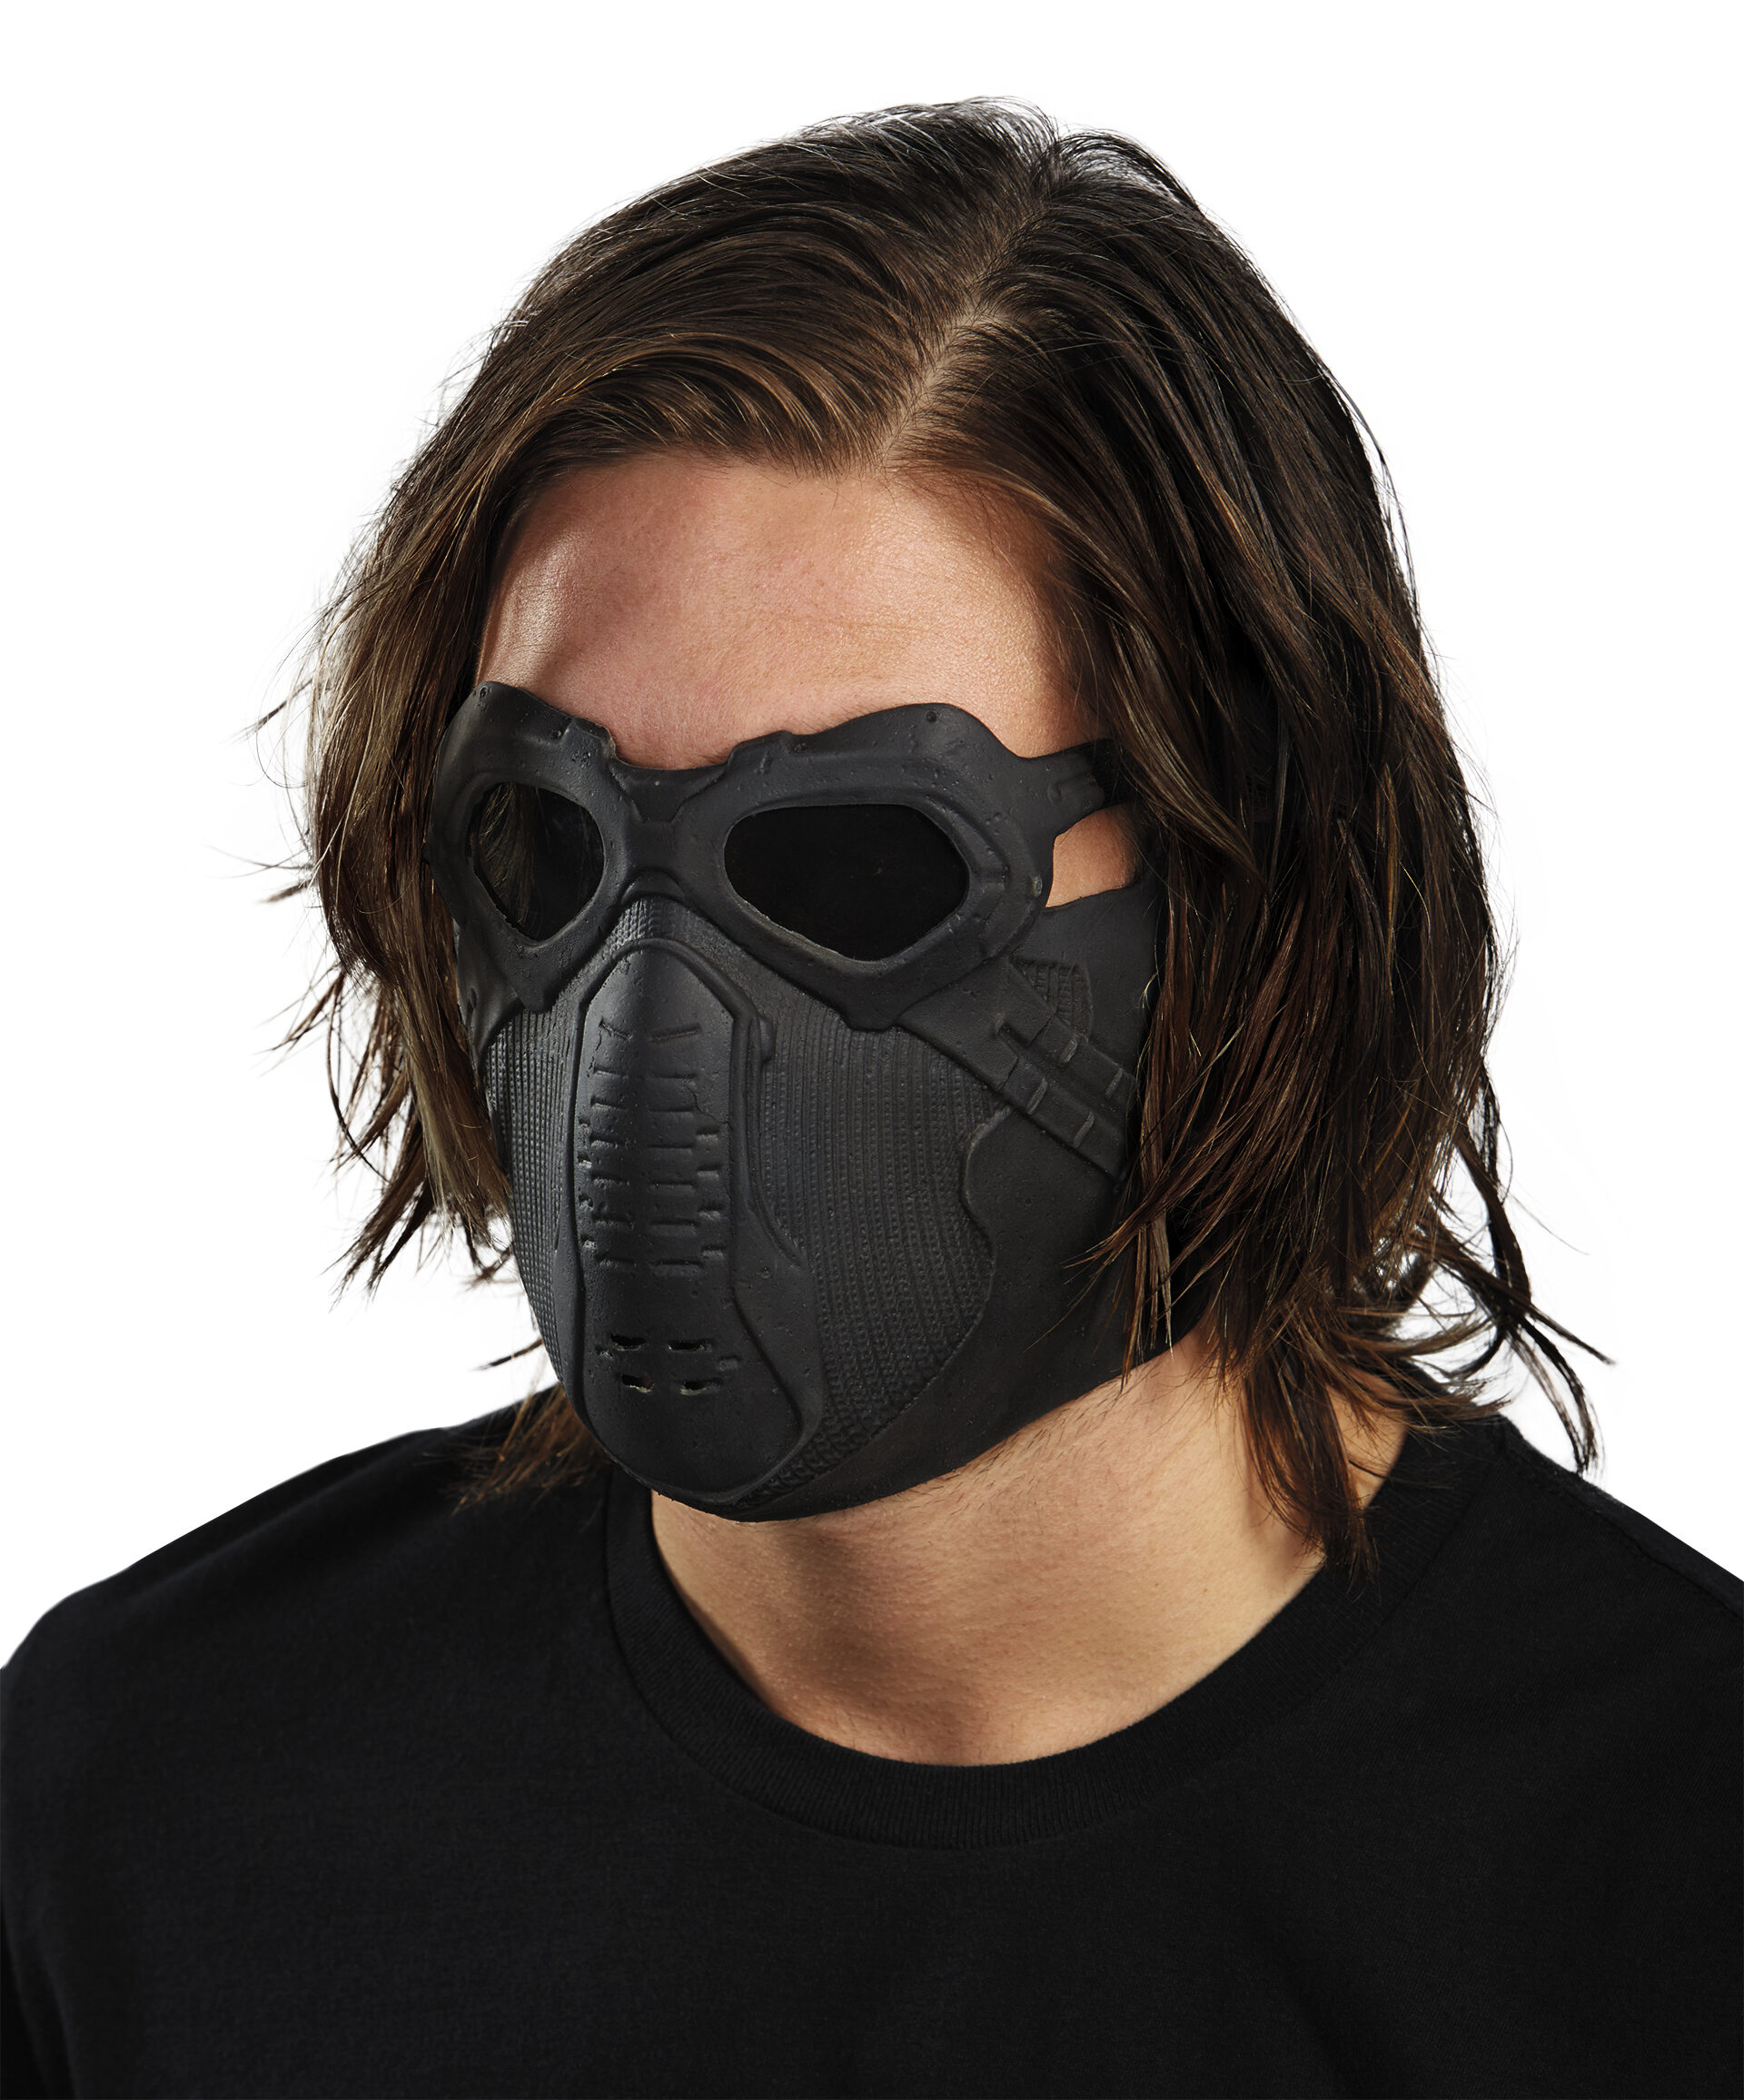 Buy masks. Winter Soldier Mask. Крутые маски. Каска закрывающая лицо. Крутые маски для лица.